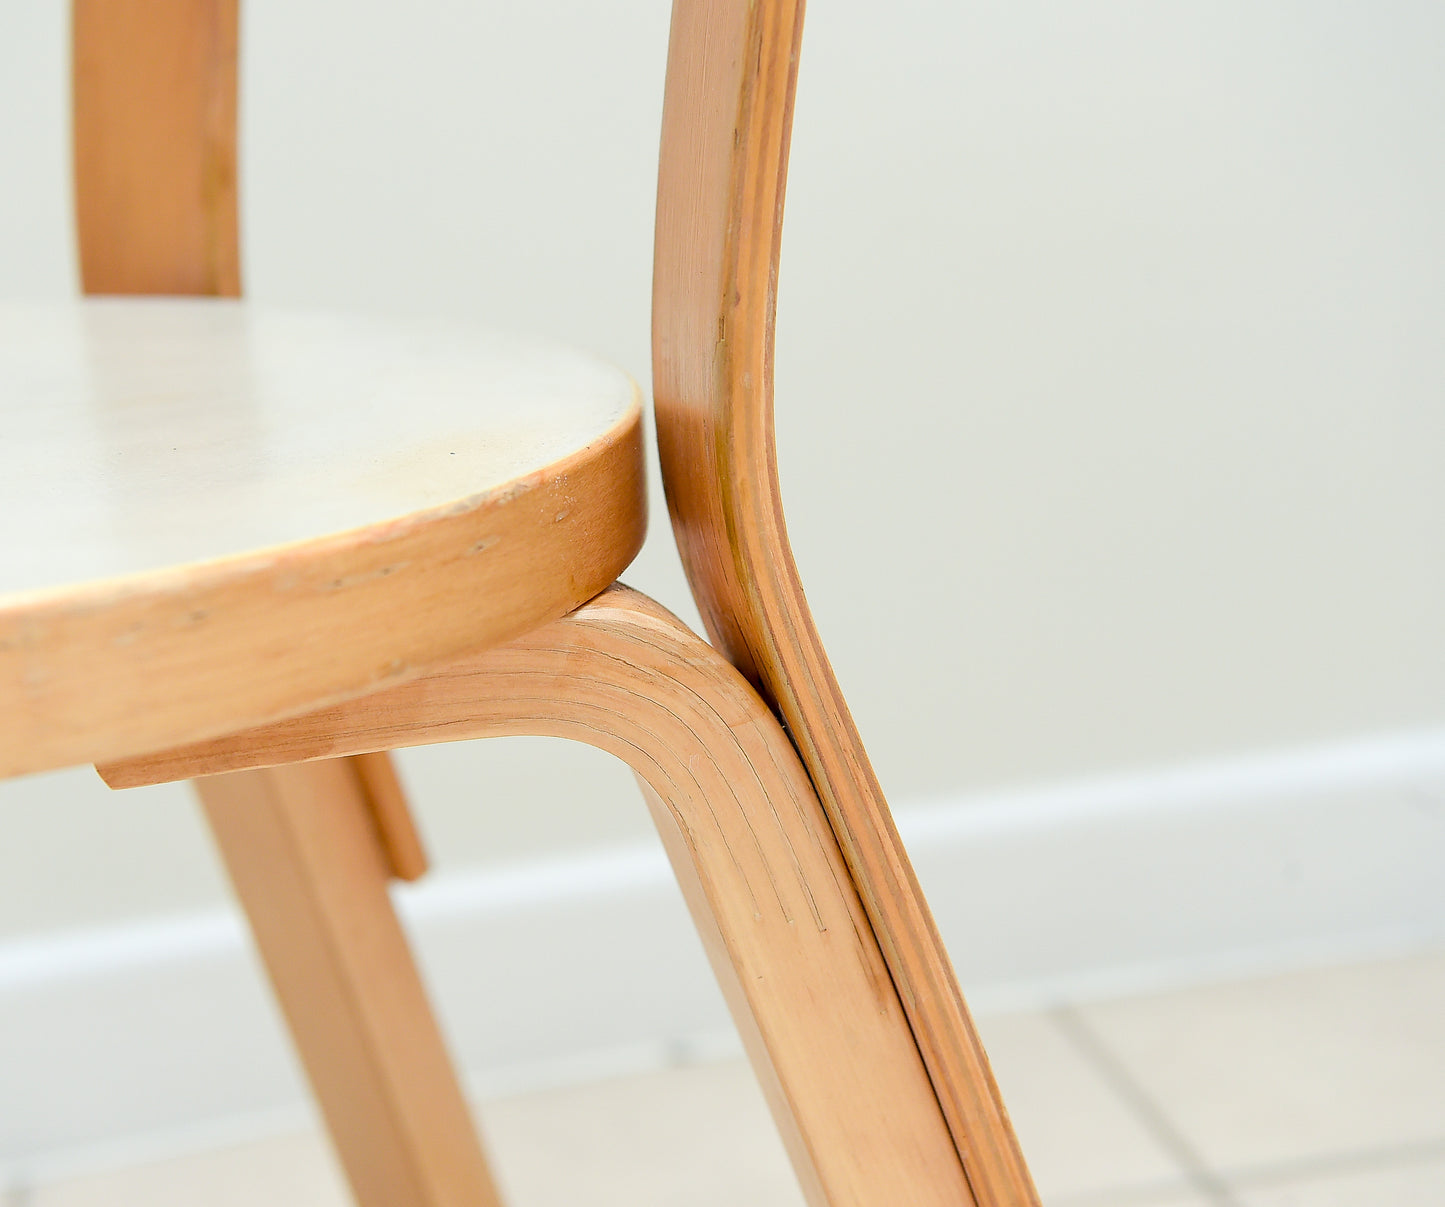 Pair 0f Model 66 Chair By Alvar Aalto For Artek, Finland